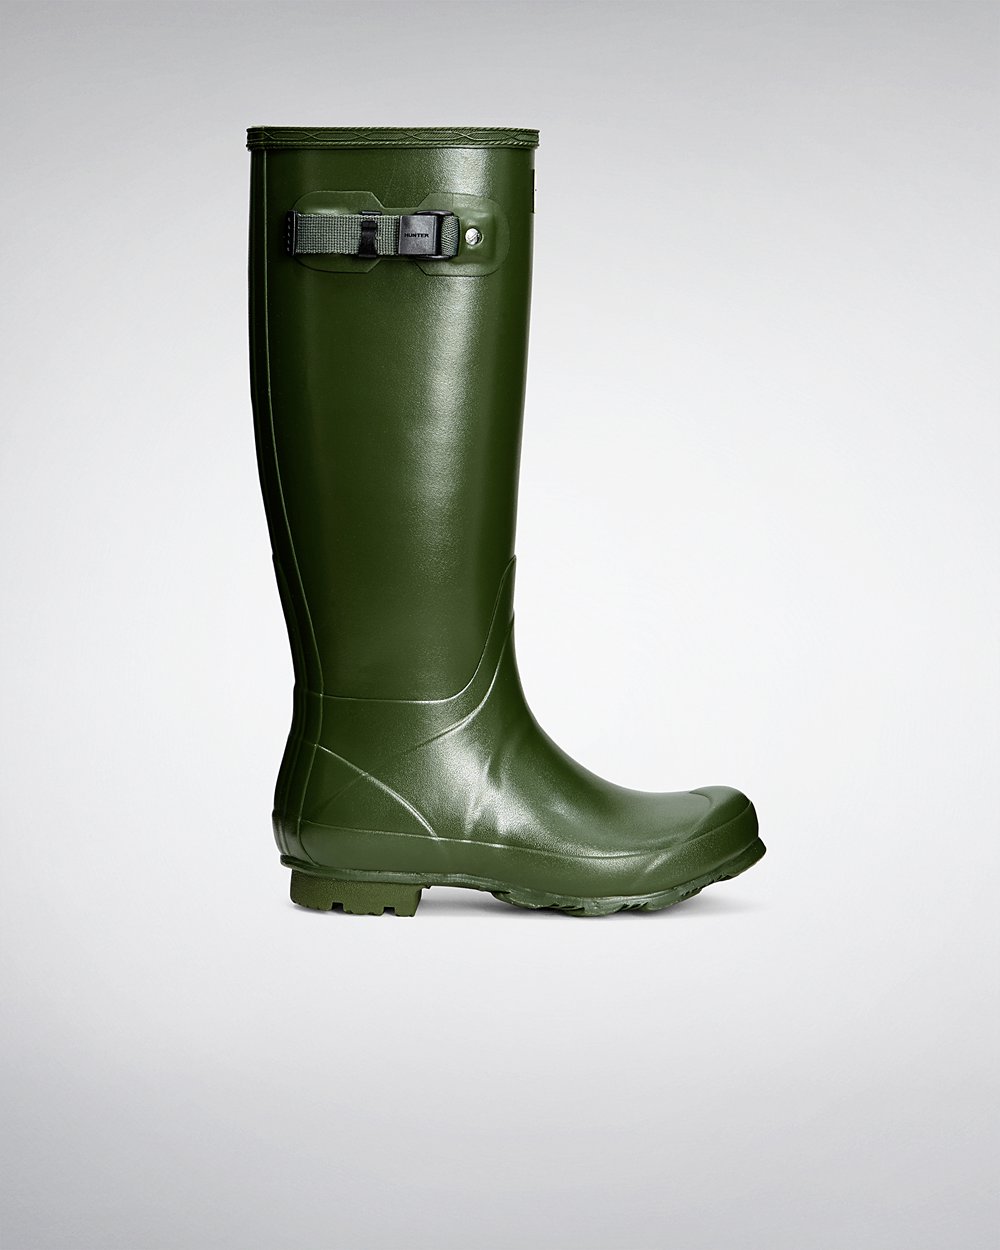 Womens Tall Rain Boots - Hunter Norris Field (23SWOQVDU) - Green